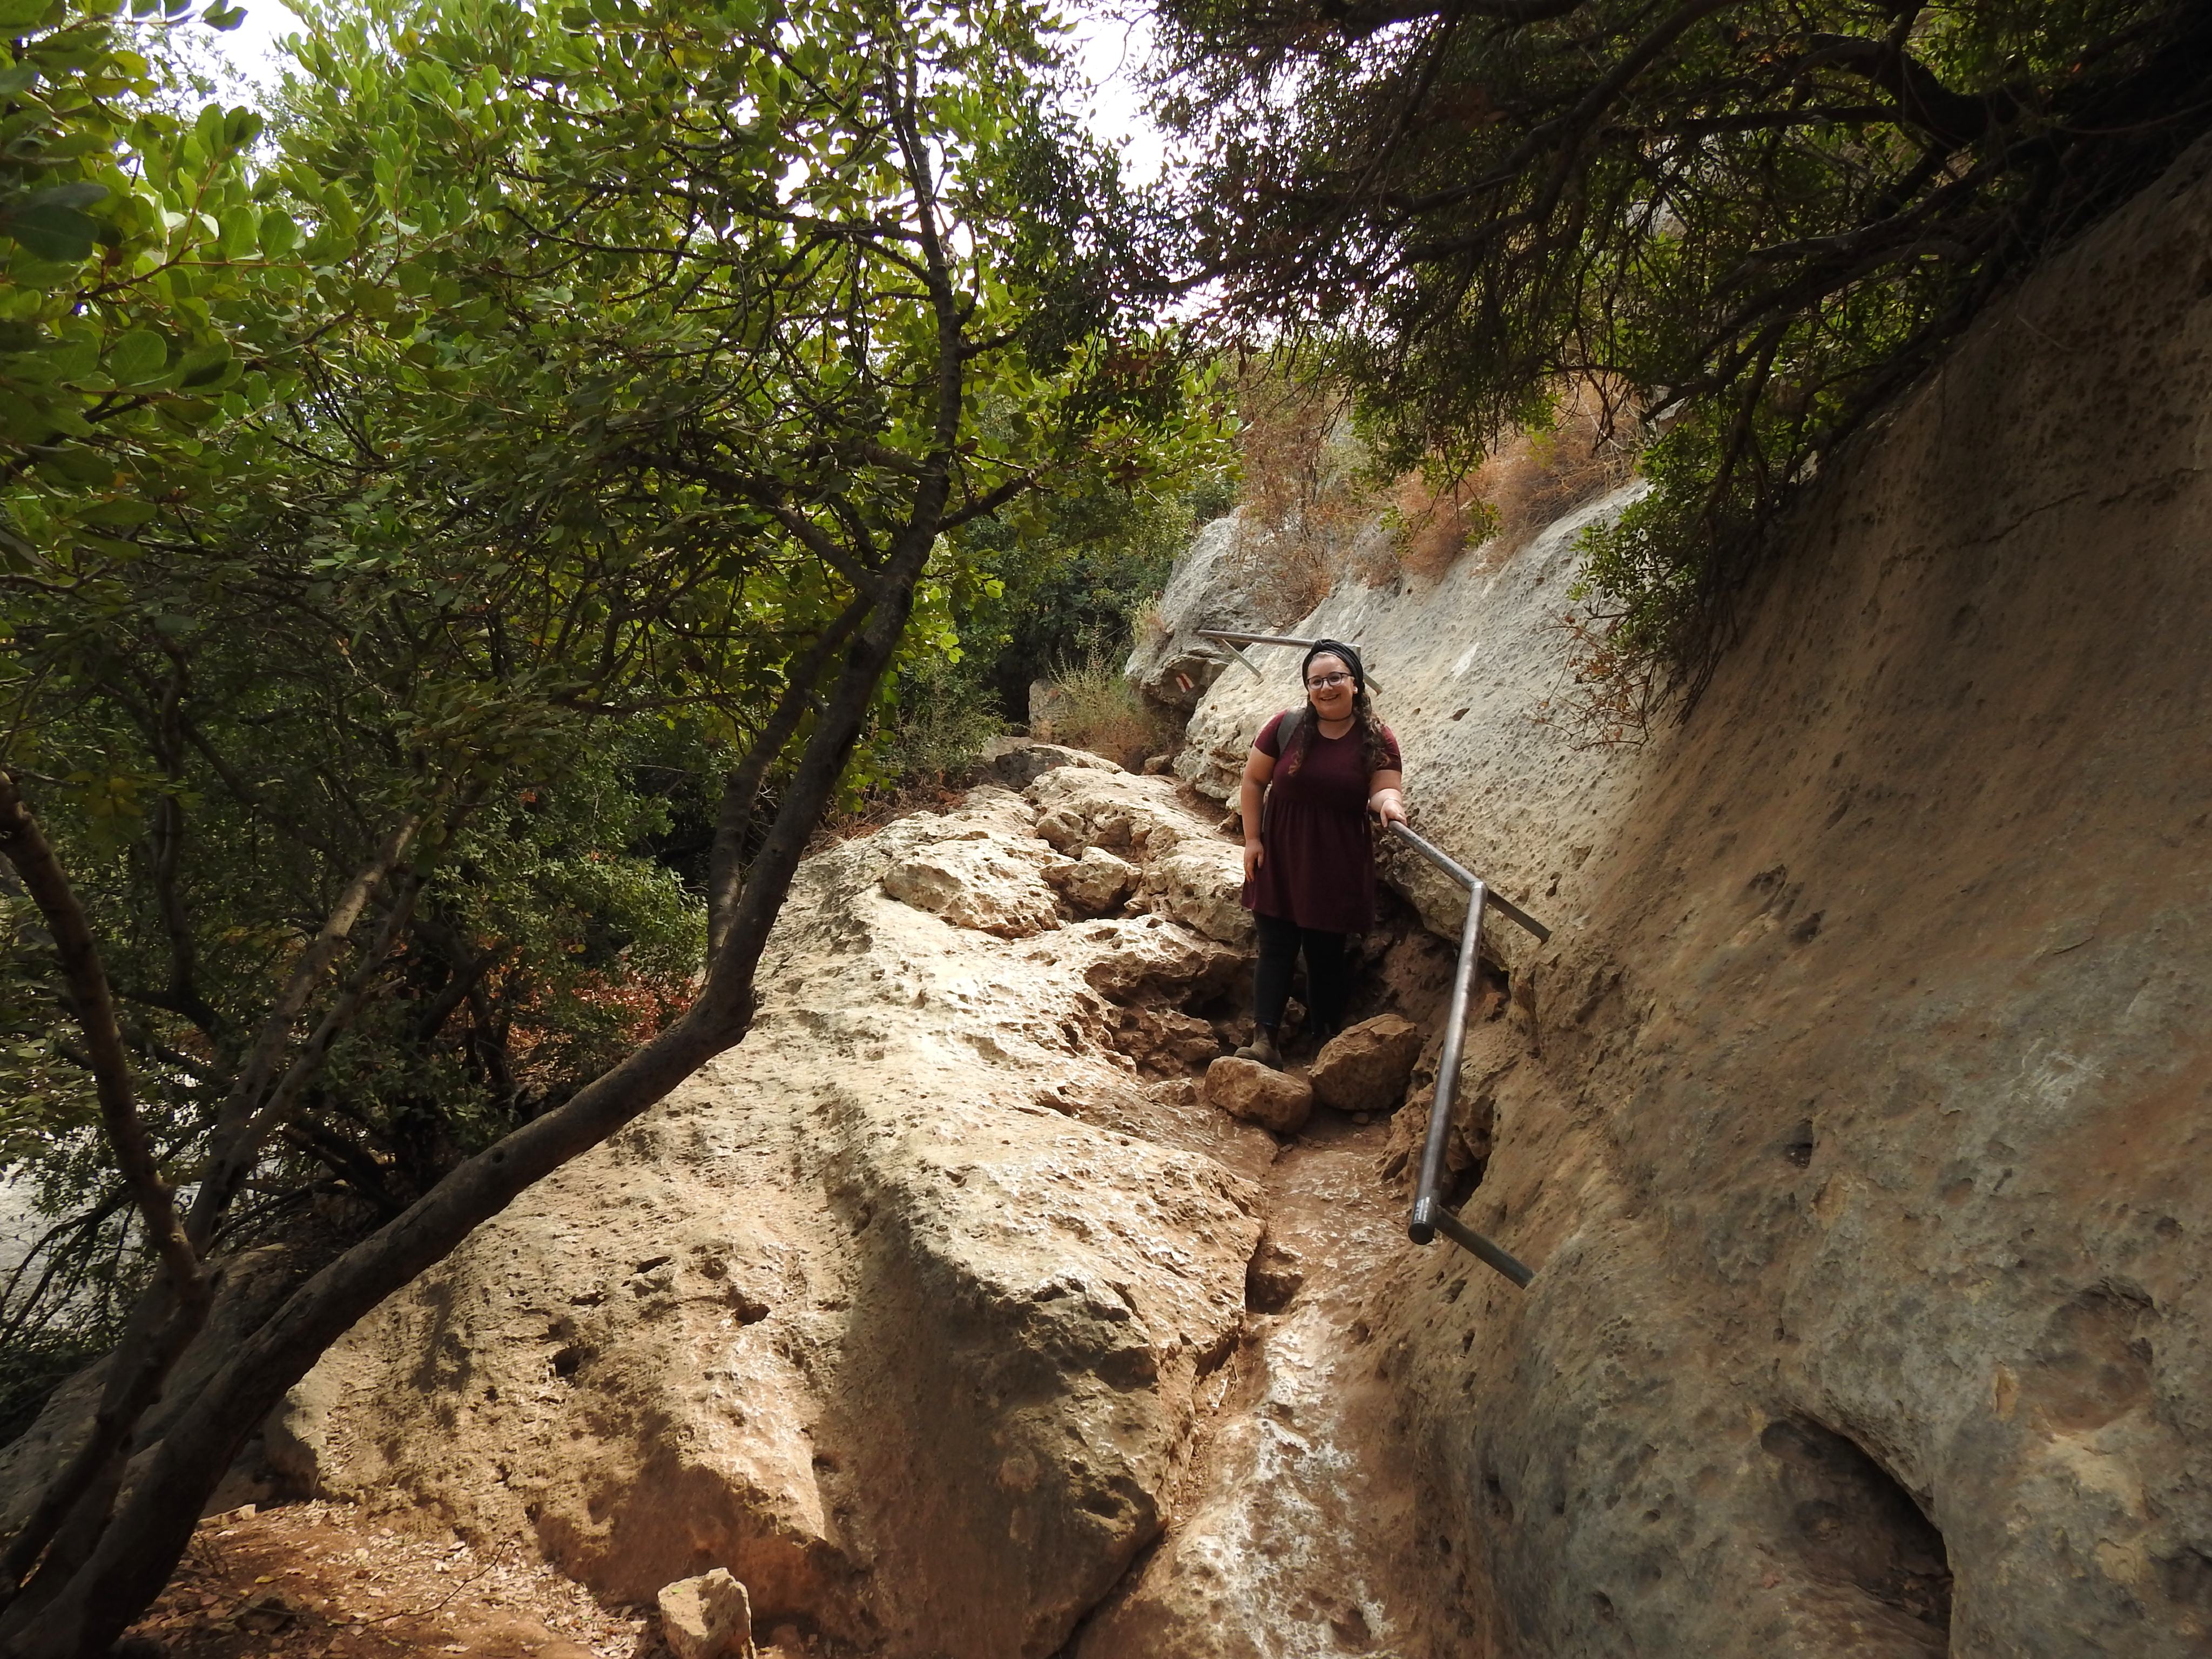 Climbing up the rocky path